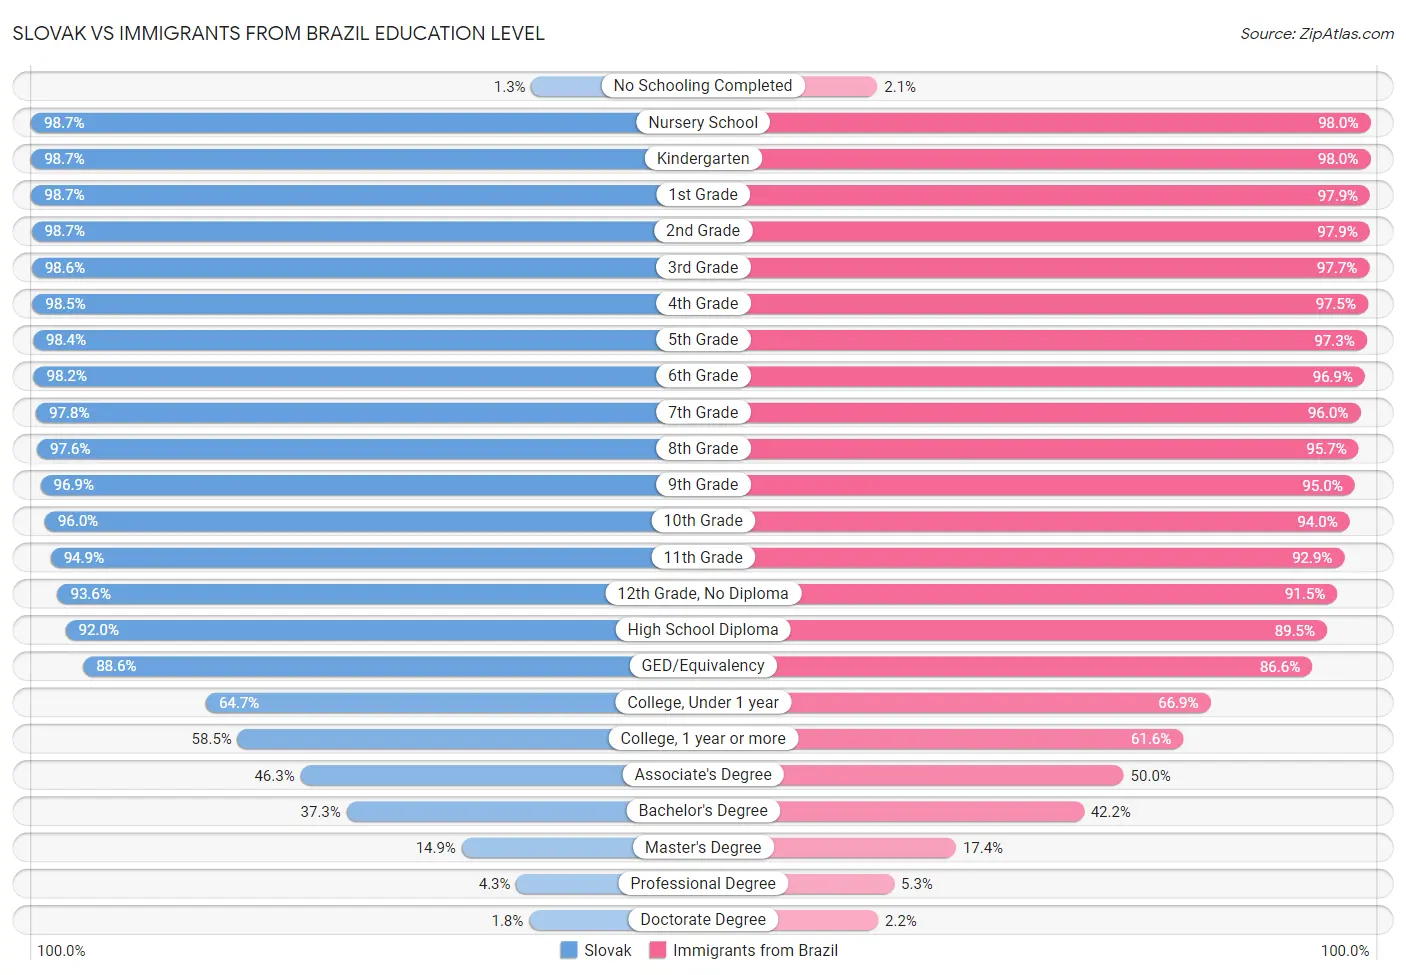 Slovak vs Immigrants from Brazil Education Level